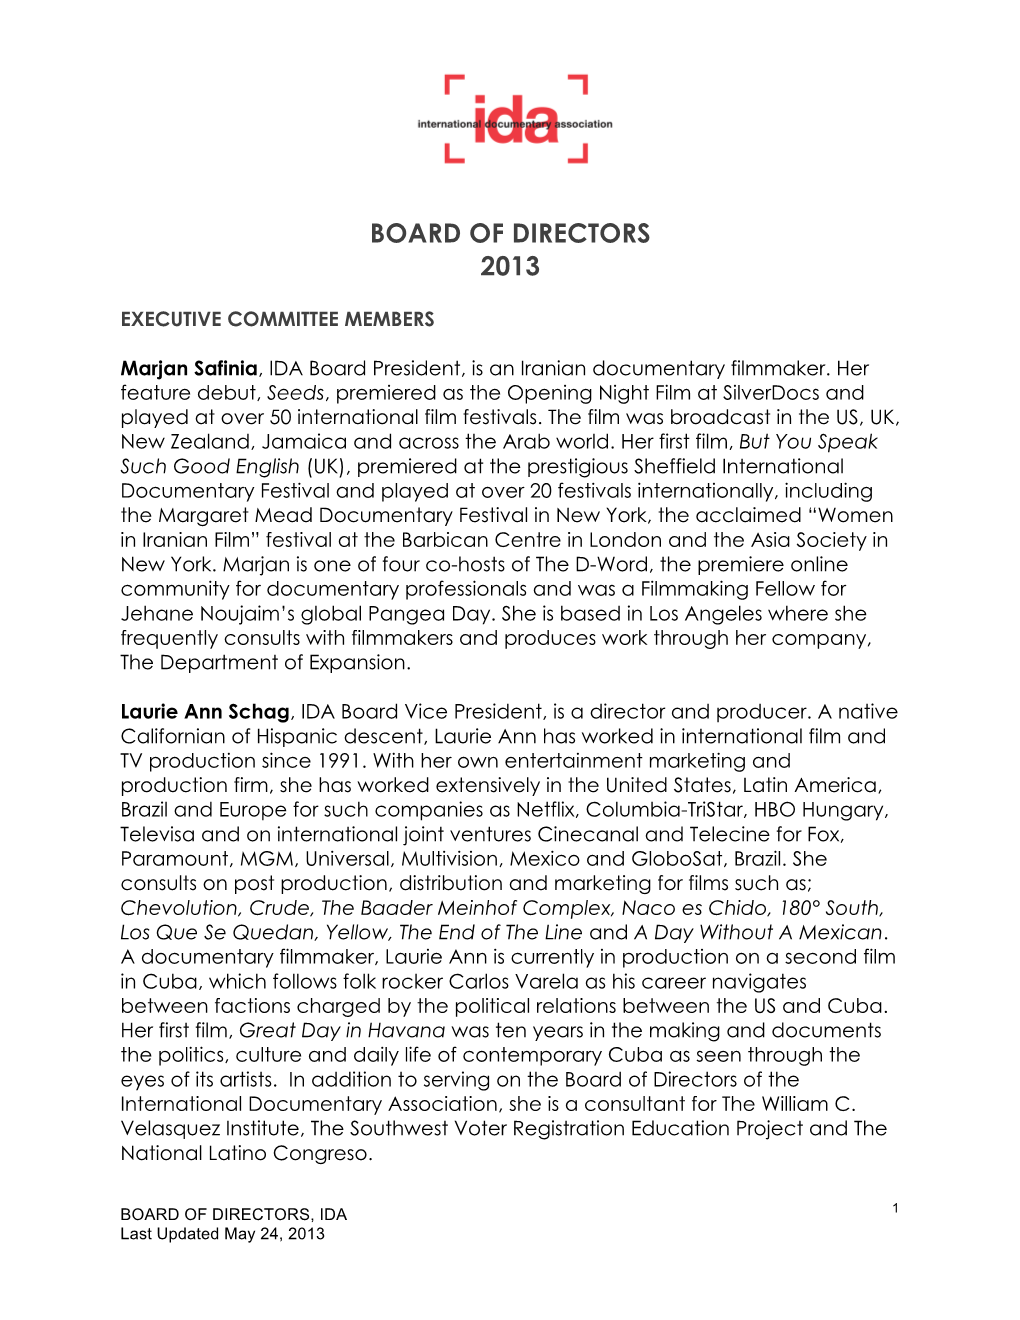 Board of Directors 2013